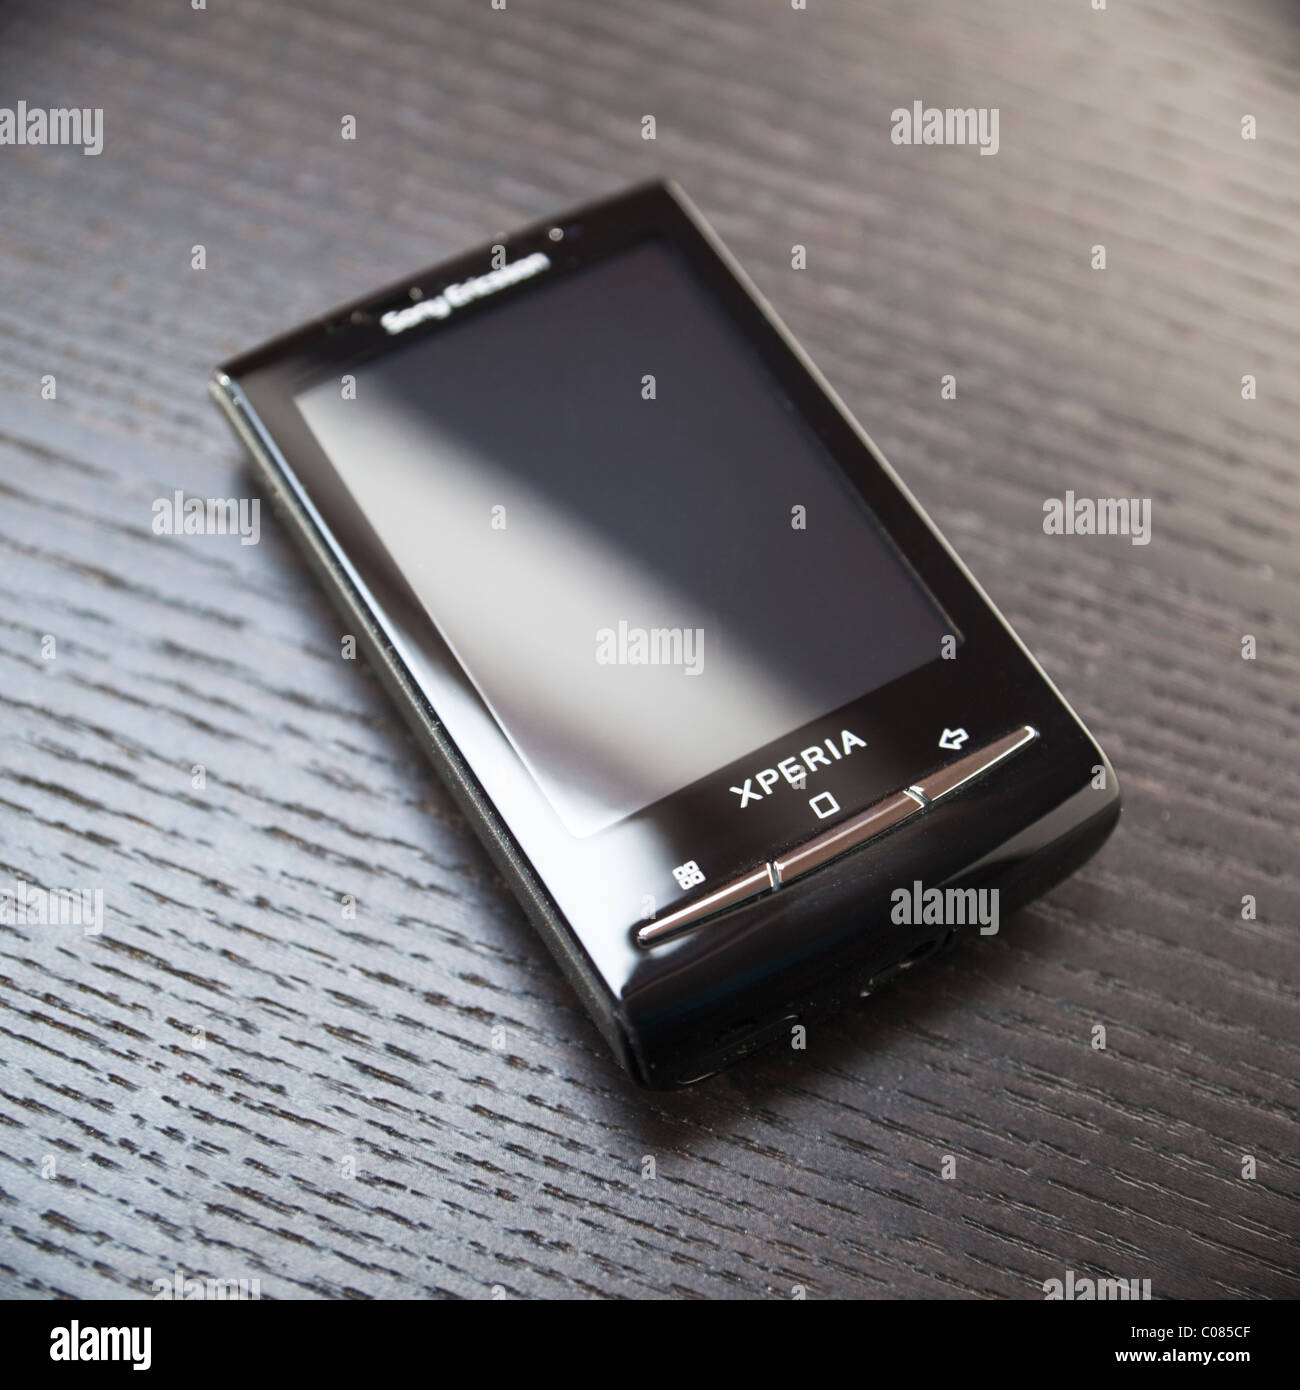 Android smartphone - Sony Ericsson Xperia X10 mini Stock Photo - Alamy